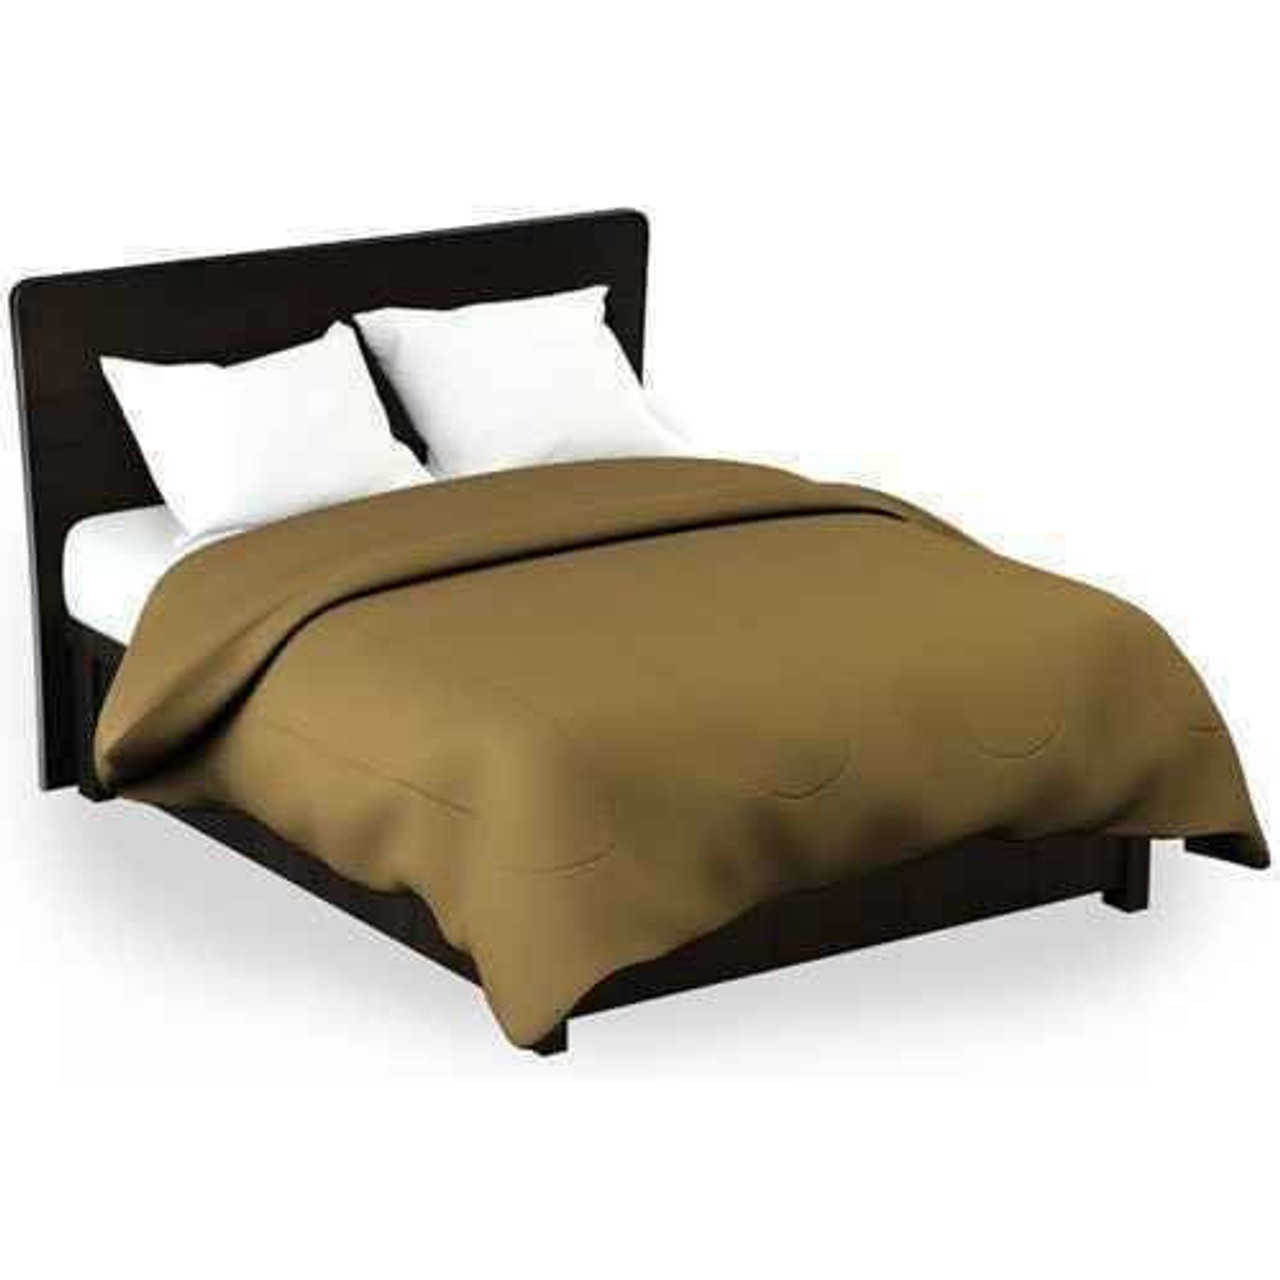 WestPoint/Martex Martex Rx or Solid Gold or Comforter